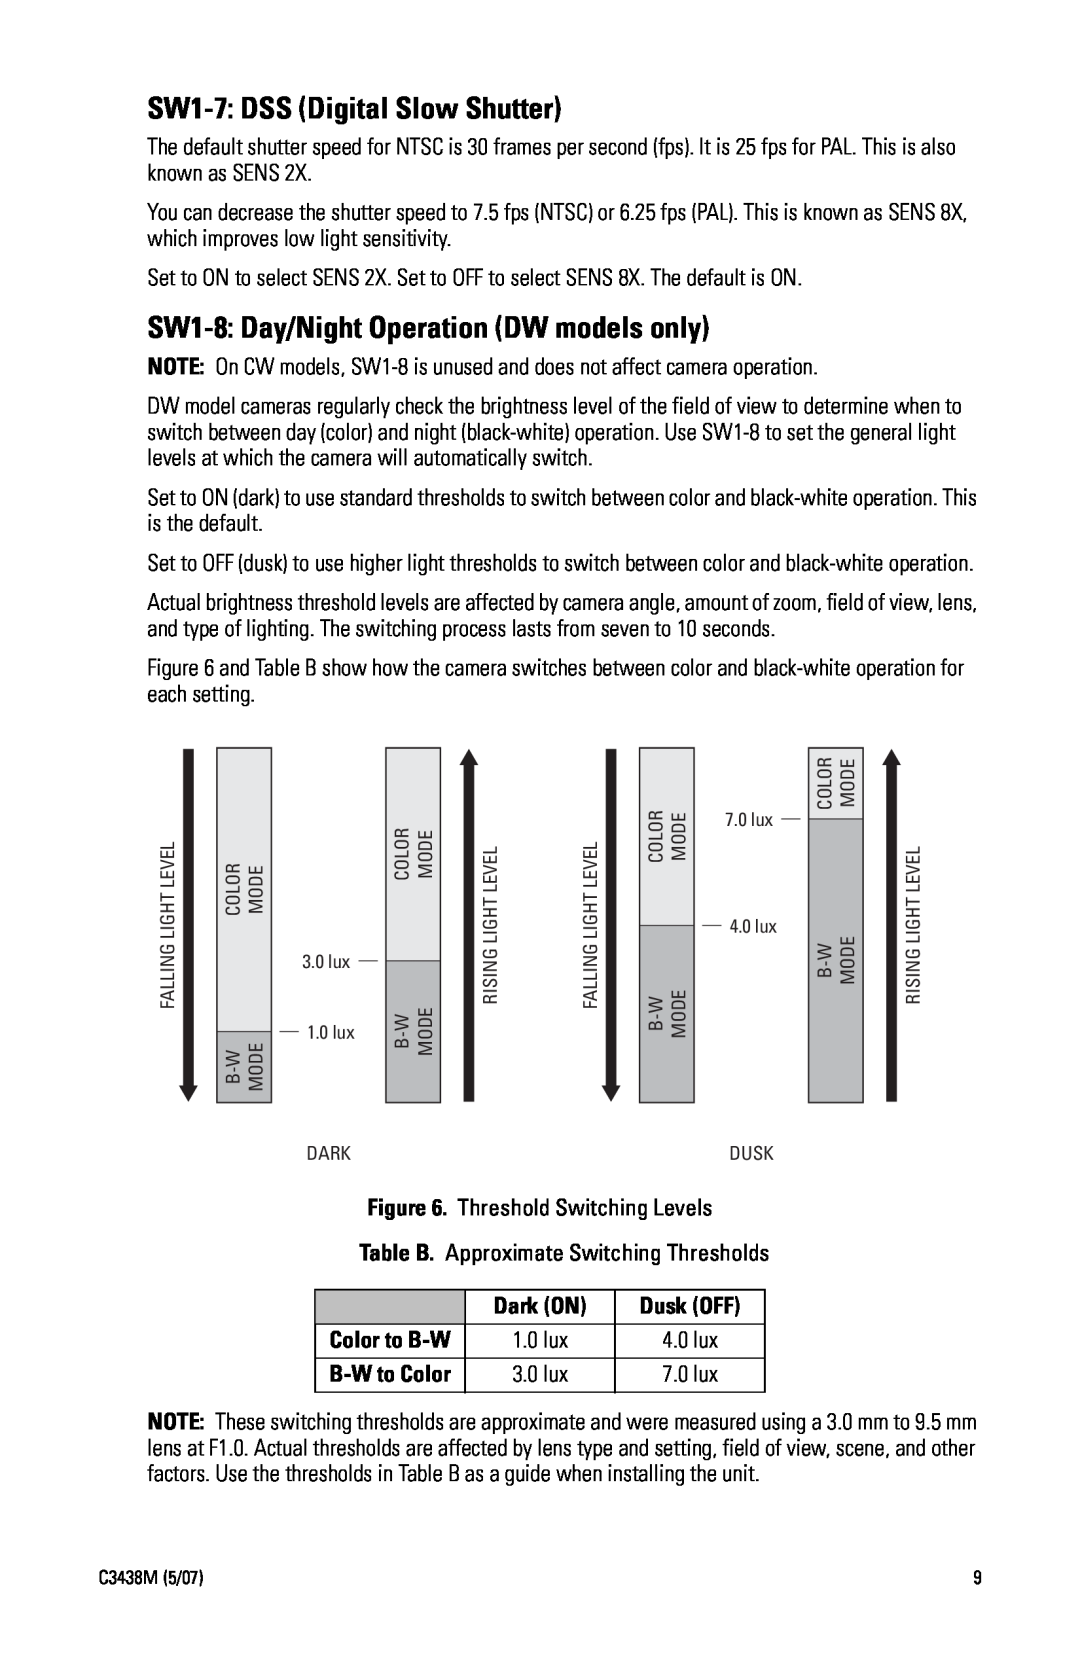 Pelco IS110, IS150 manual SW1-7 DSS Digital Slow Shutter, SW1-8 Day/Night Operation DW models only, Dark ON, Dusk OFF 